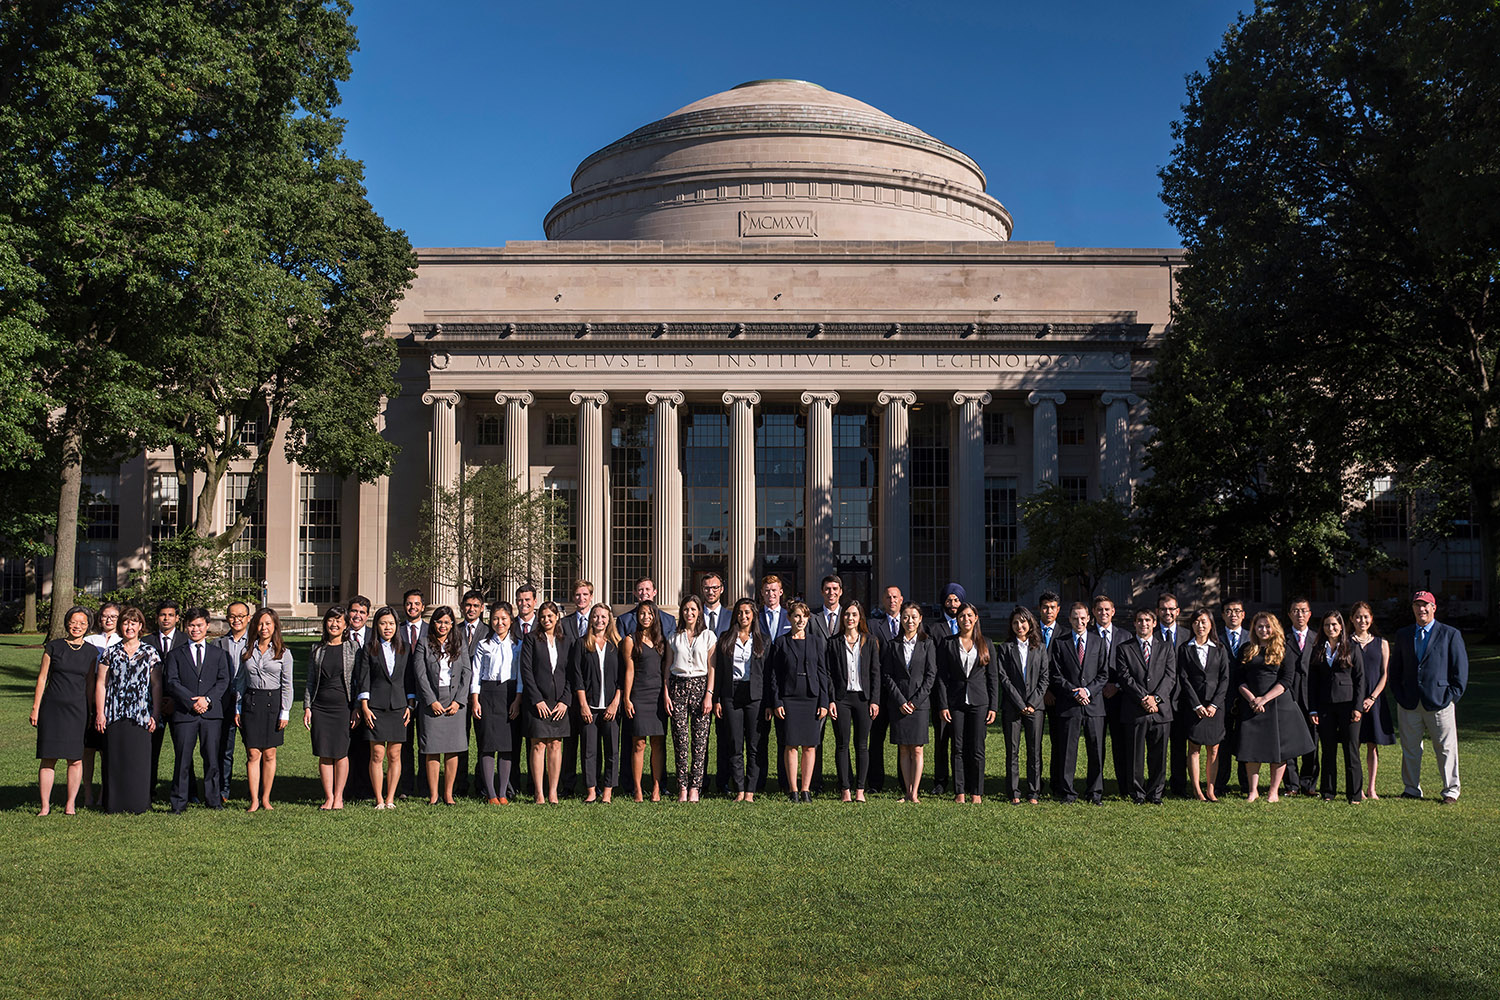 Massachusetts Institute of Technology – Cambridge, MA, United States